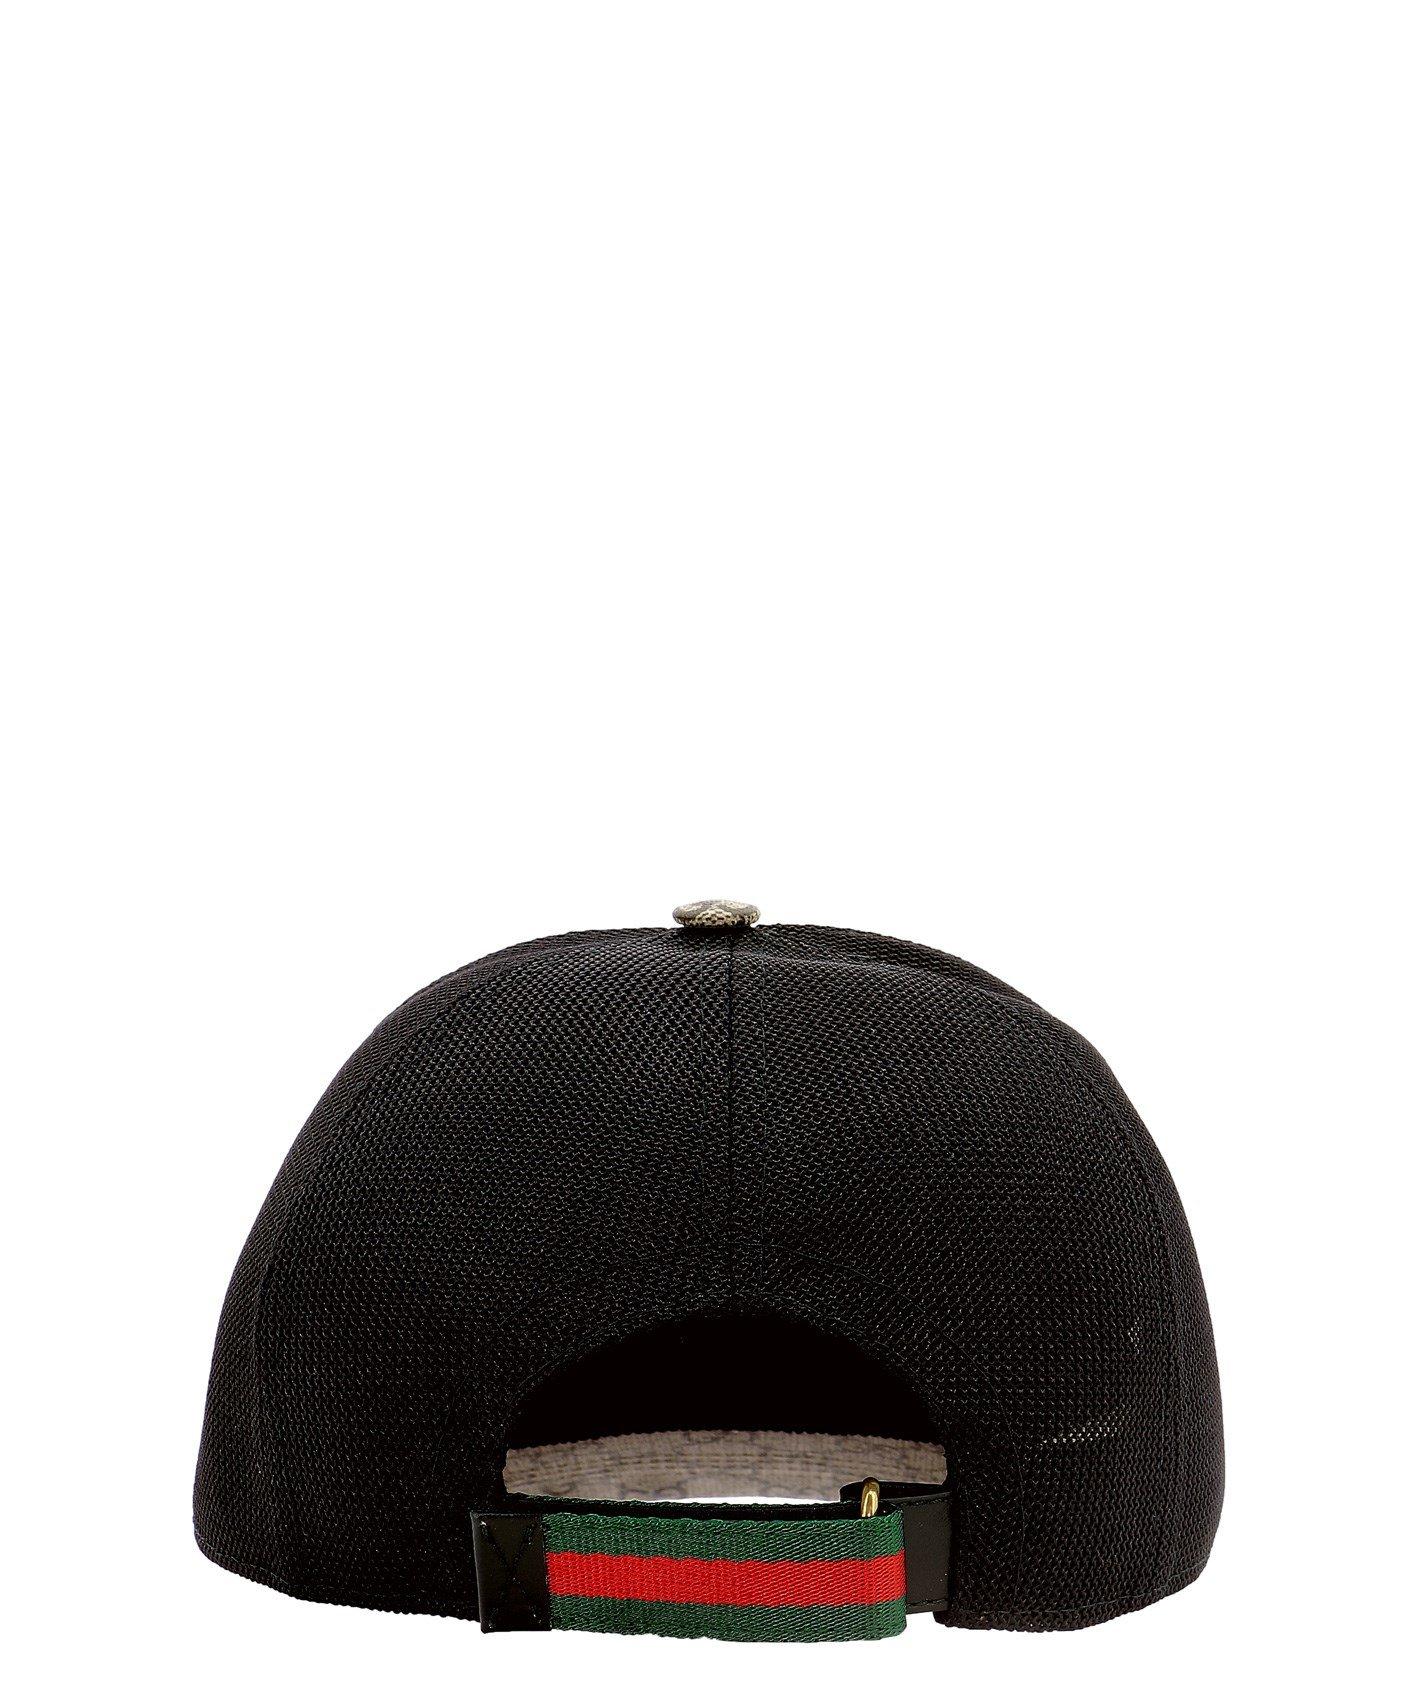 Gucci Canvas Kingsnake Print GG Supreme Baseball Hat for Men - Save 40% -  Lyst